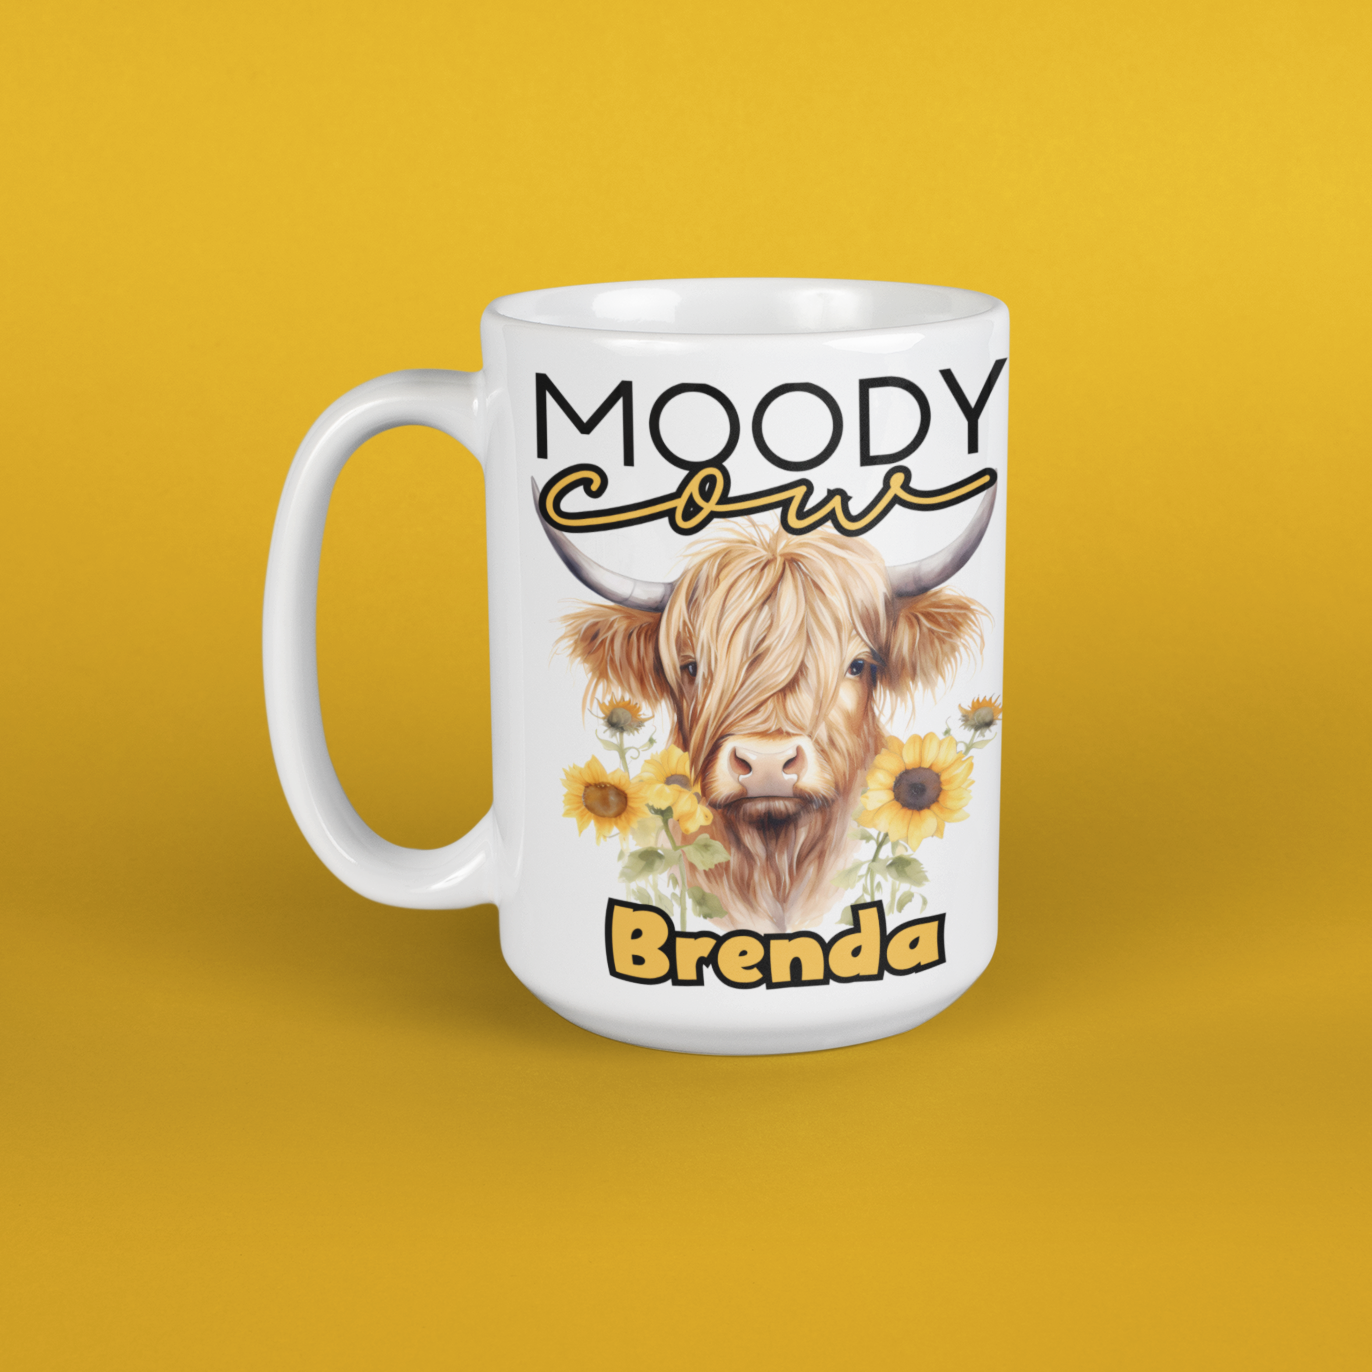 moody highland cow personalised mug with any name gift for birthday or Christmas big cup large 15oz